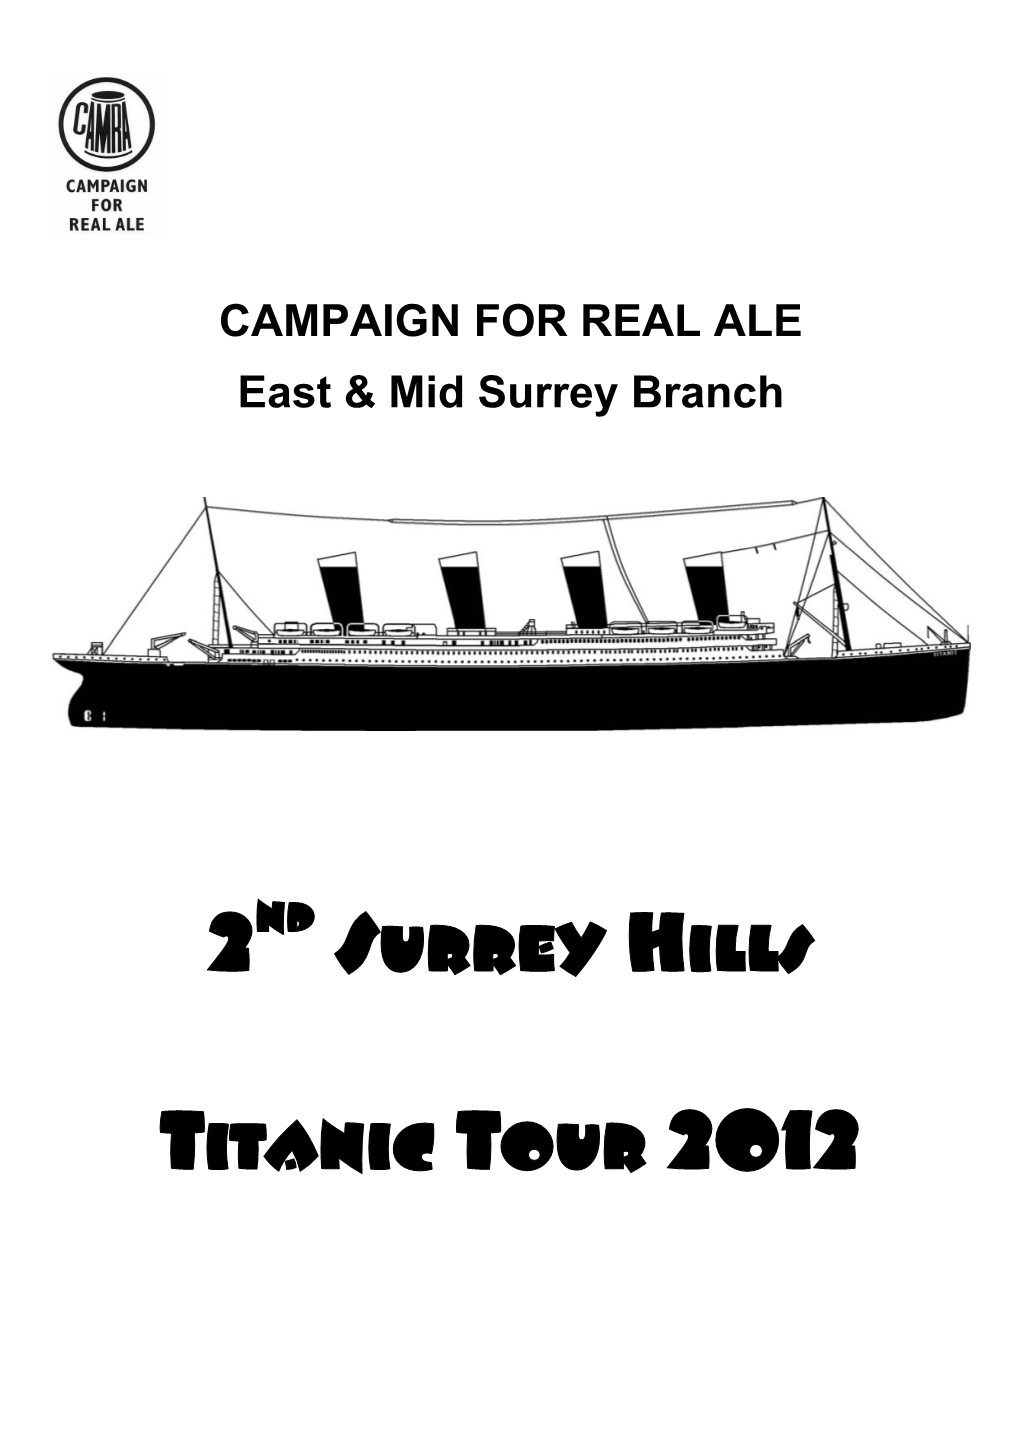 2 Surrey Hills Titanic Tour 2012